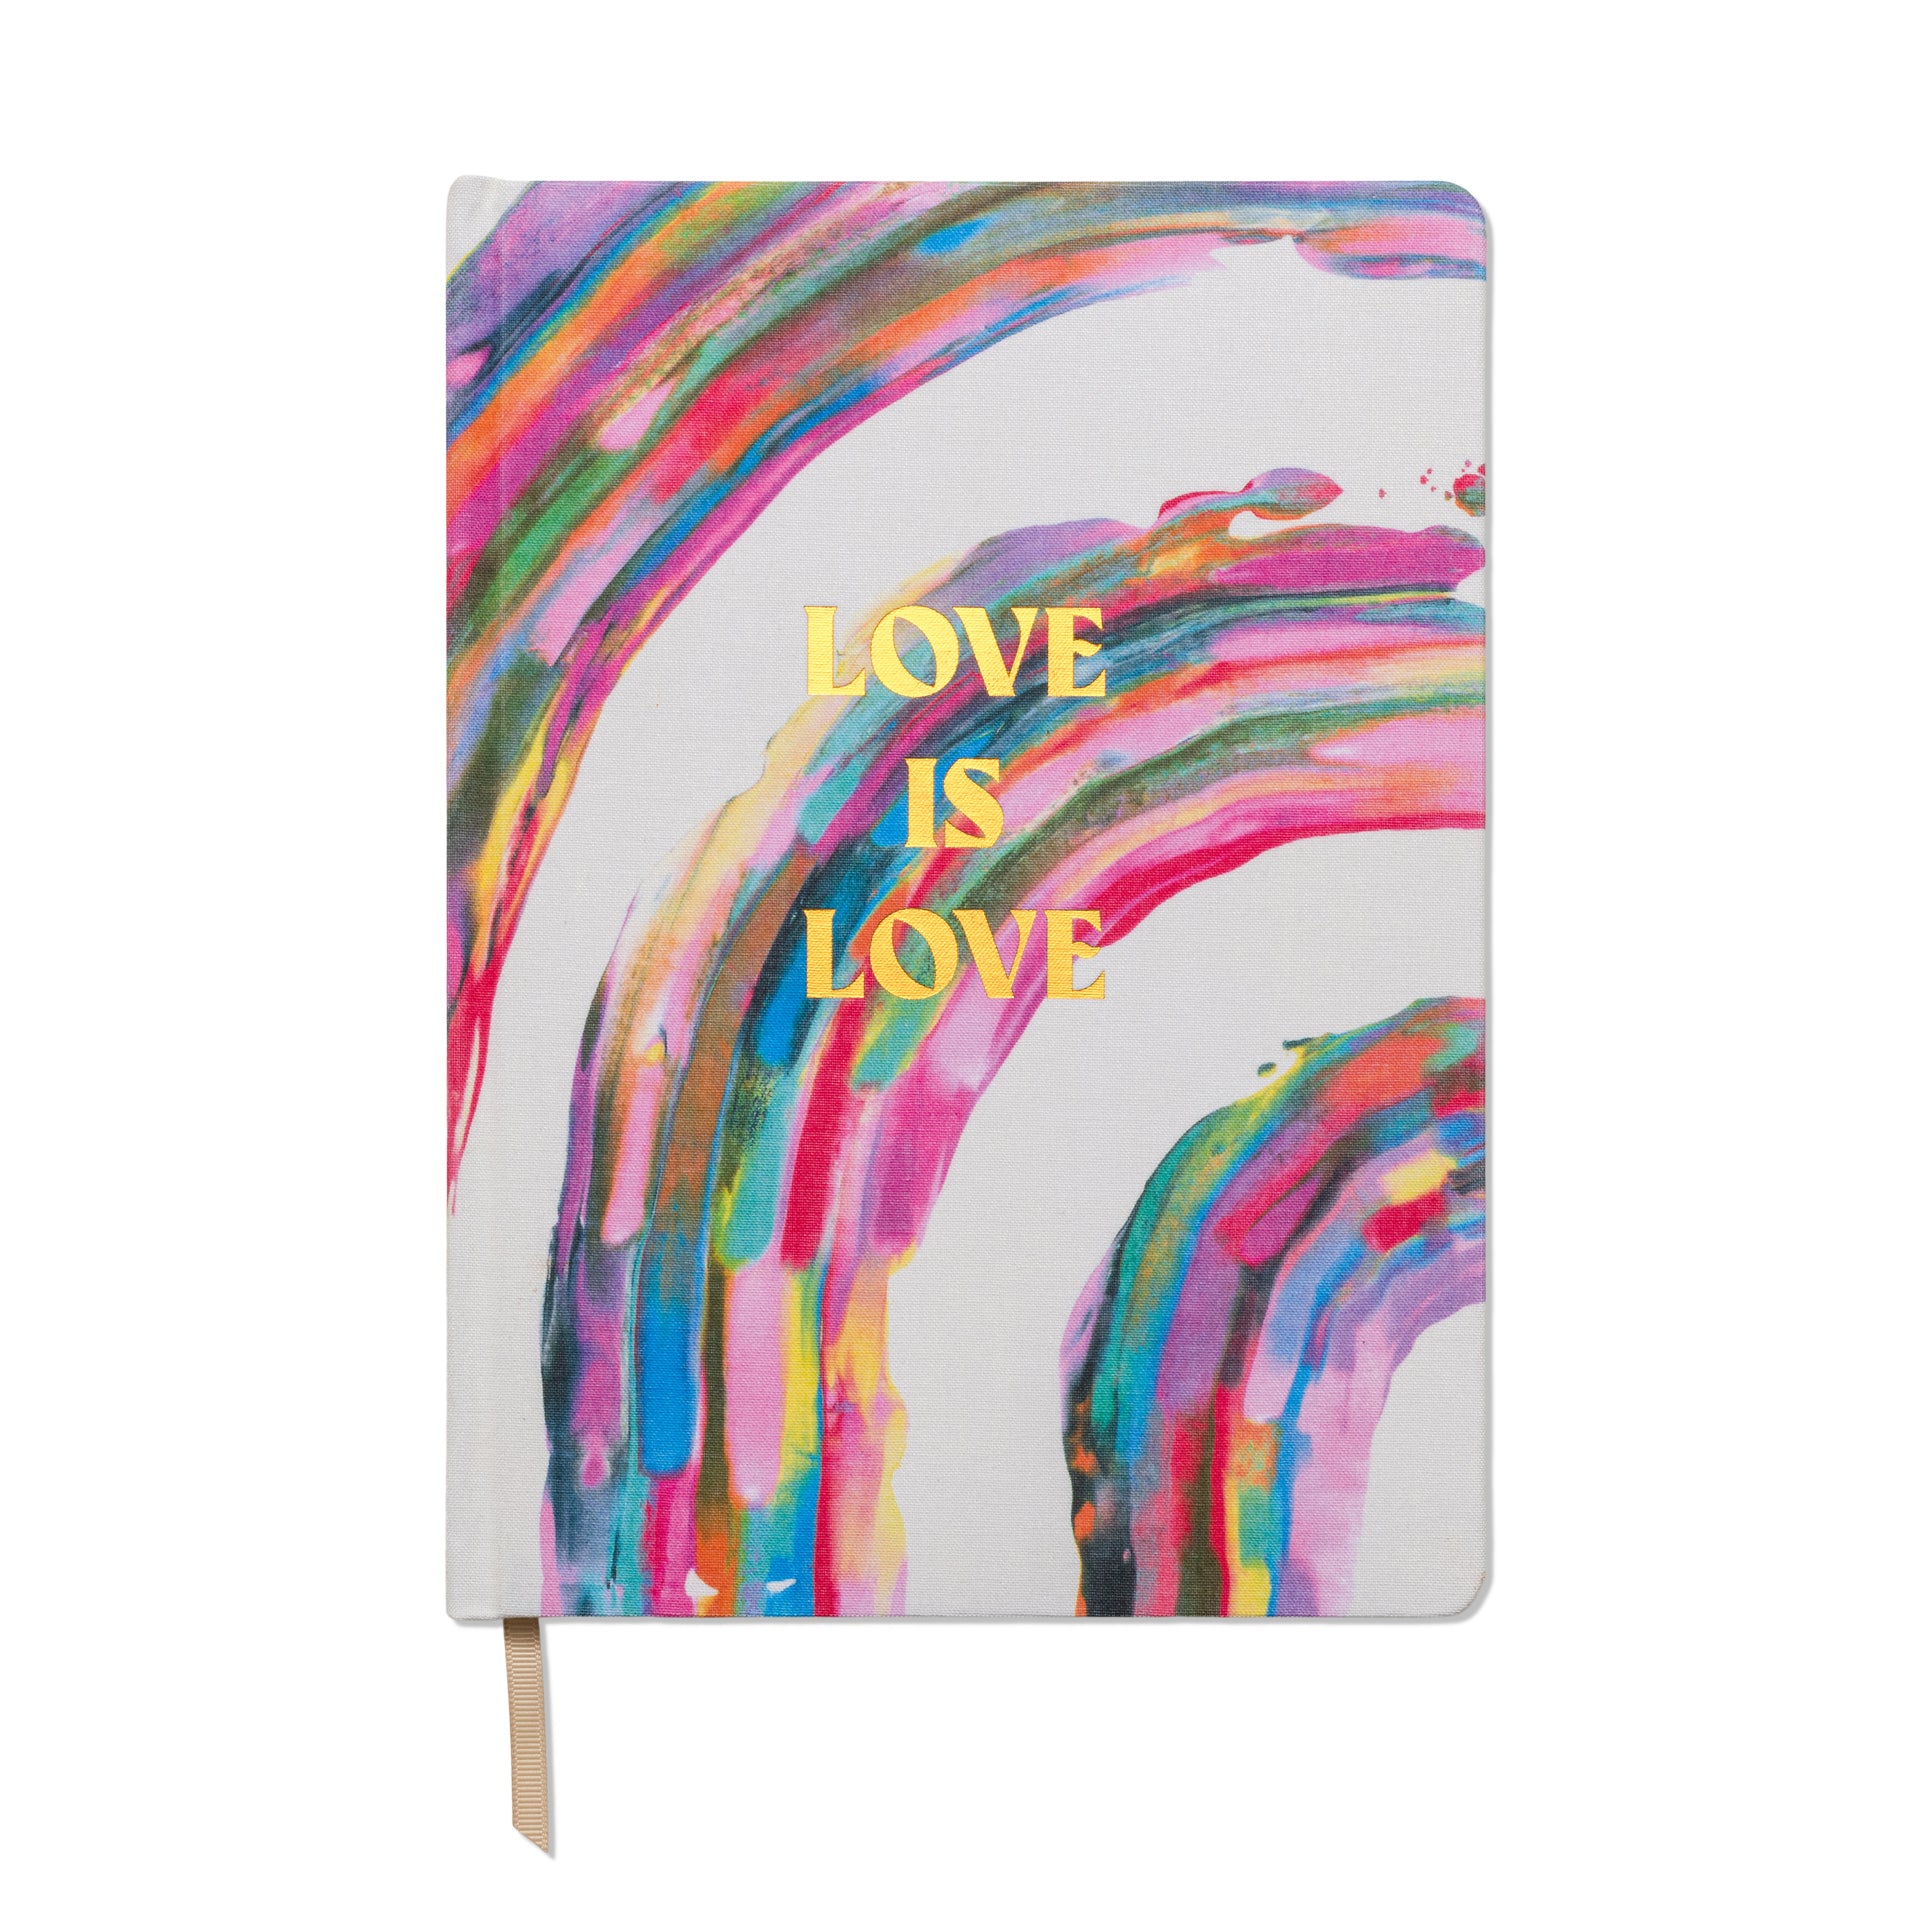 Designworks Ink Jumbo Journal Bookcloth - Love Is Love